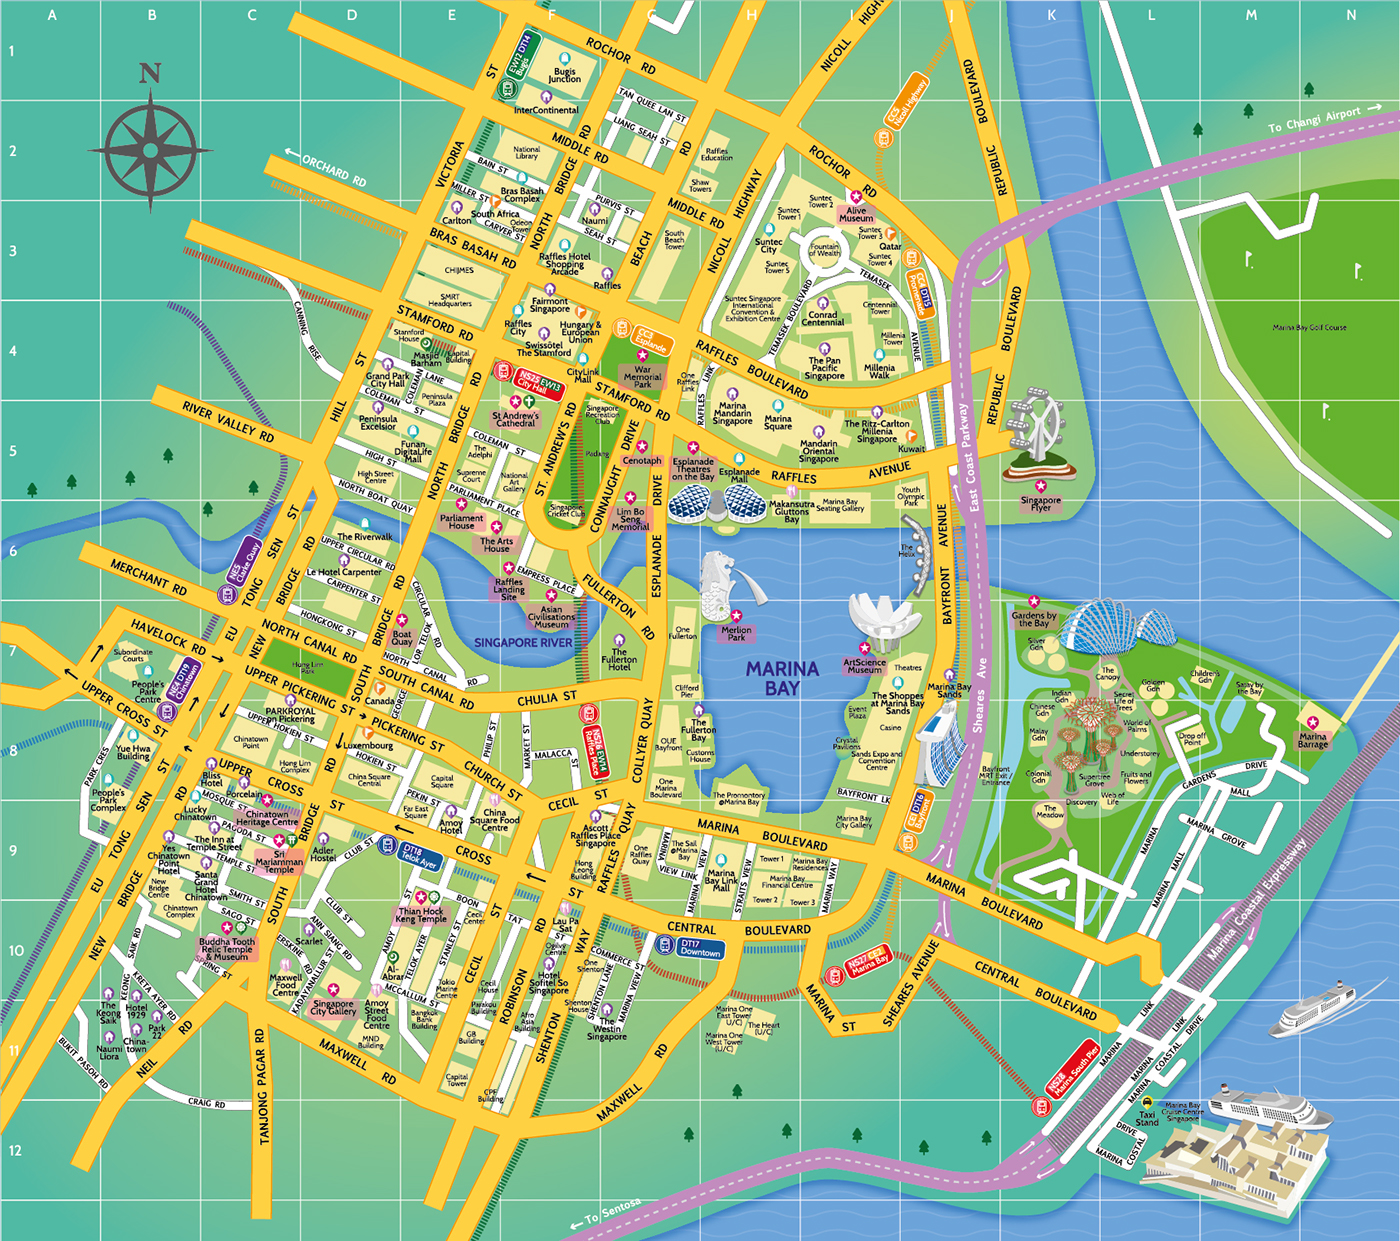 Tourist Map of Marina Bay Singapore on Behance